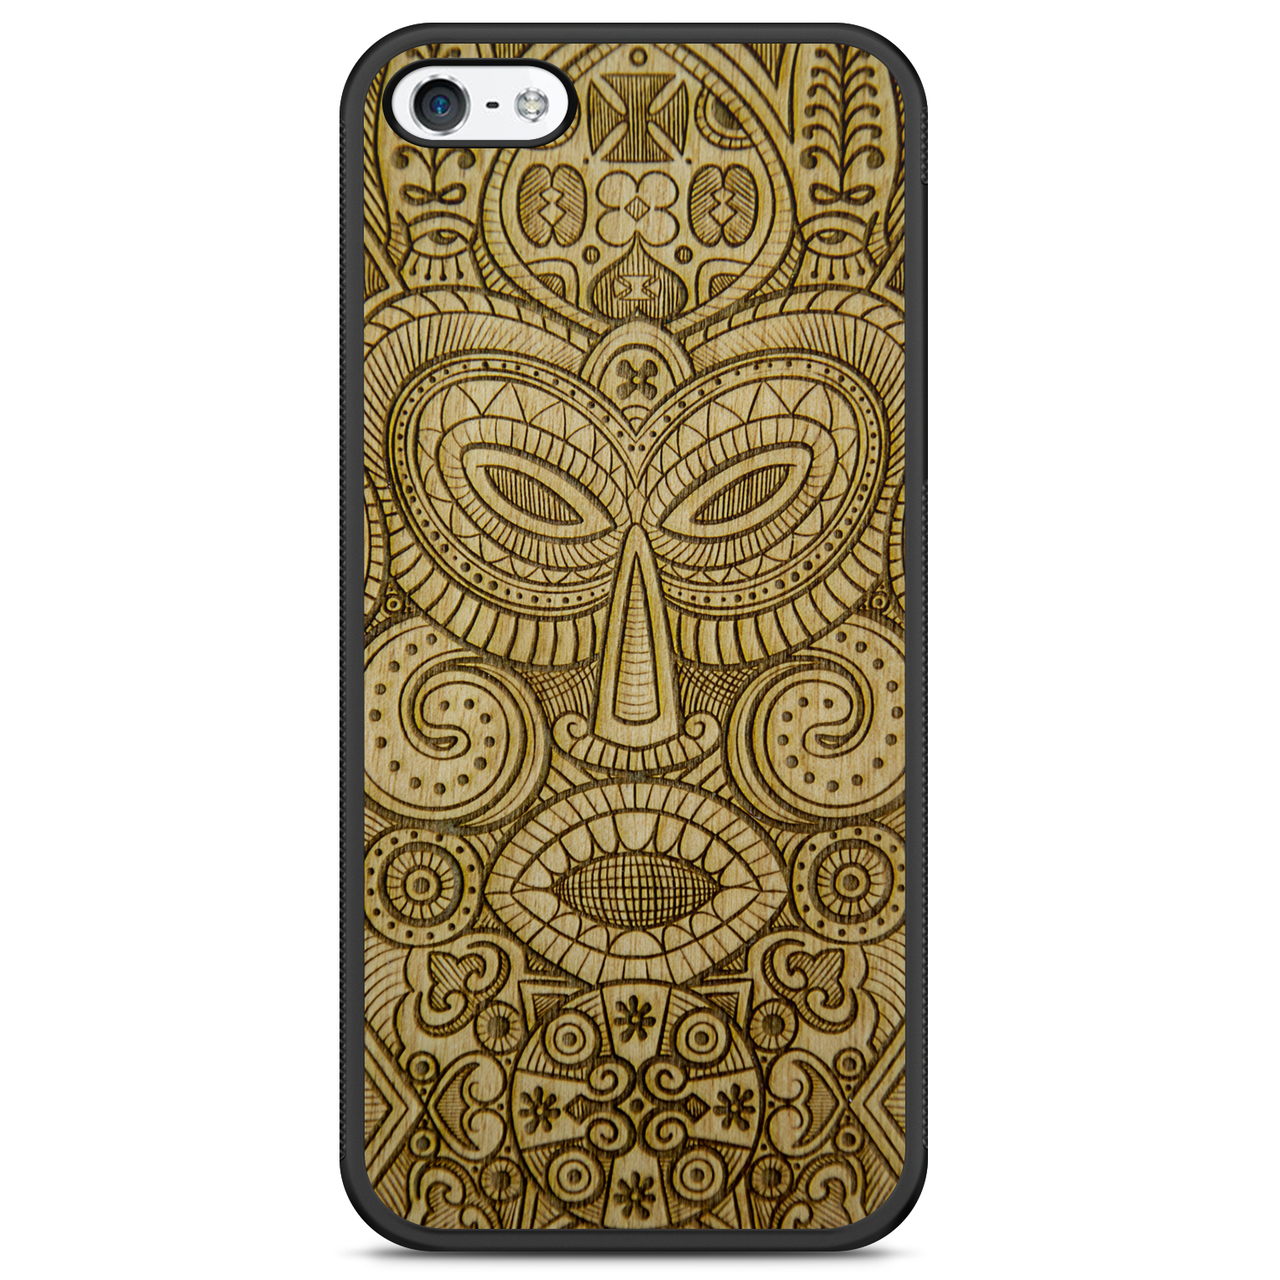 iPhone 5 Tribal Mask Wood Phone Case